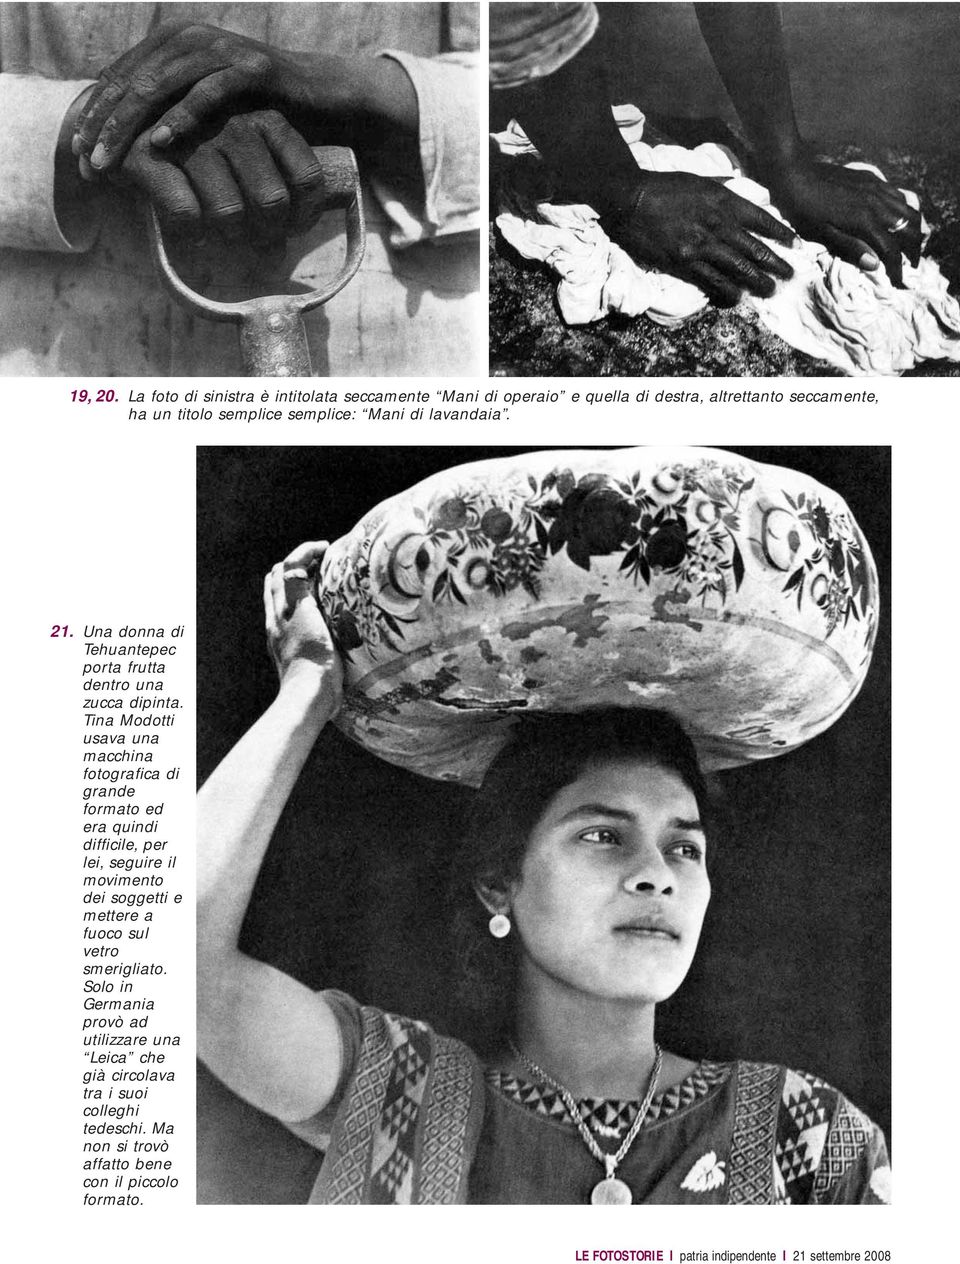 Mani di lavandaia. 21. Una donna di Tehuantepec porta frutta dentro una zucca dipinta.